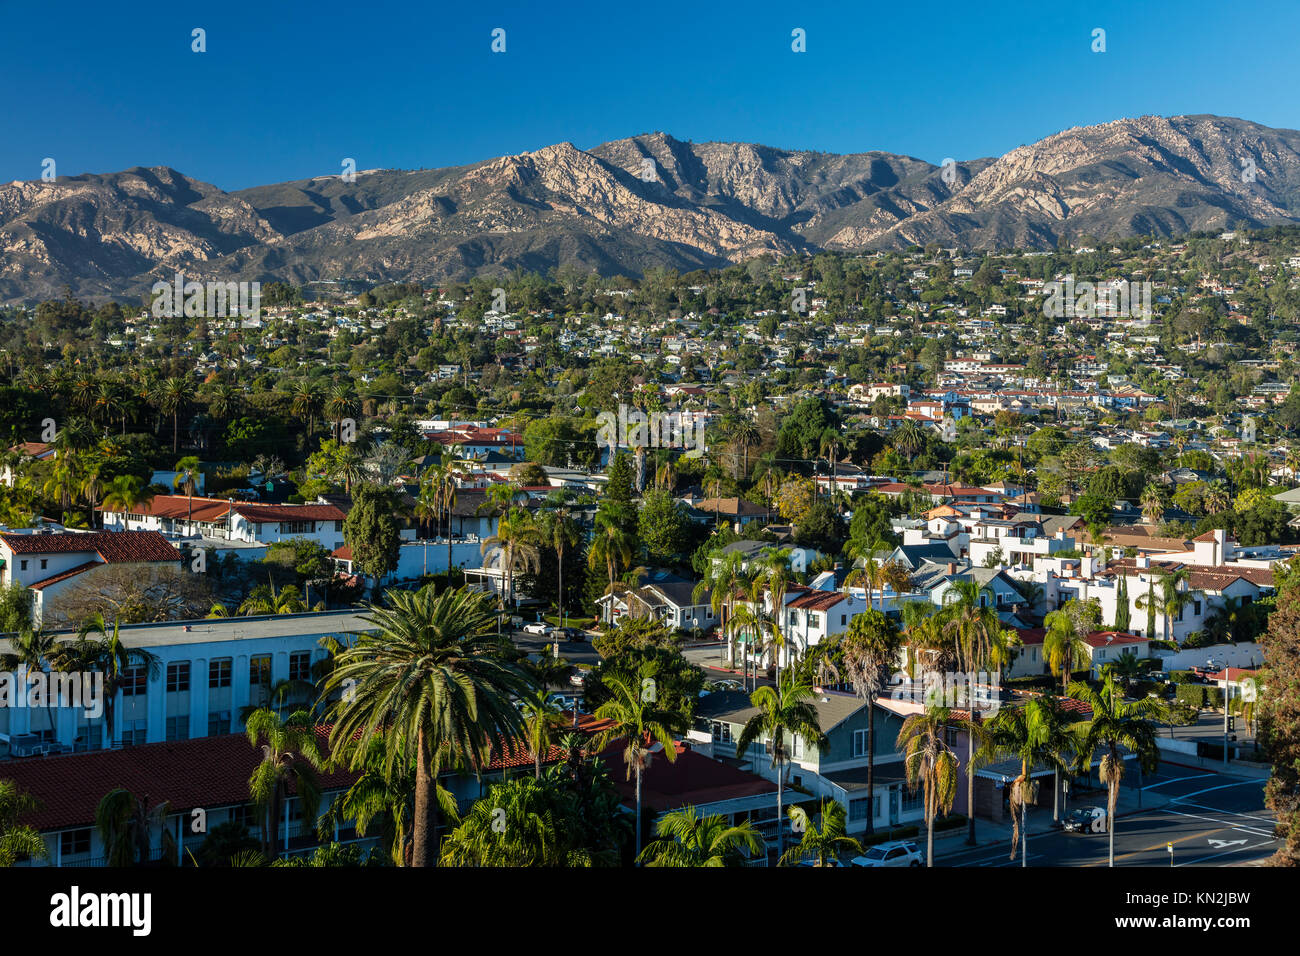 Aerial view of Santa Barbara, California neighborhoods looking towards the Riviera neighborhood. Stock Photo